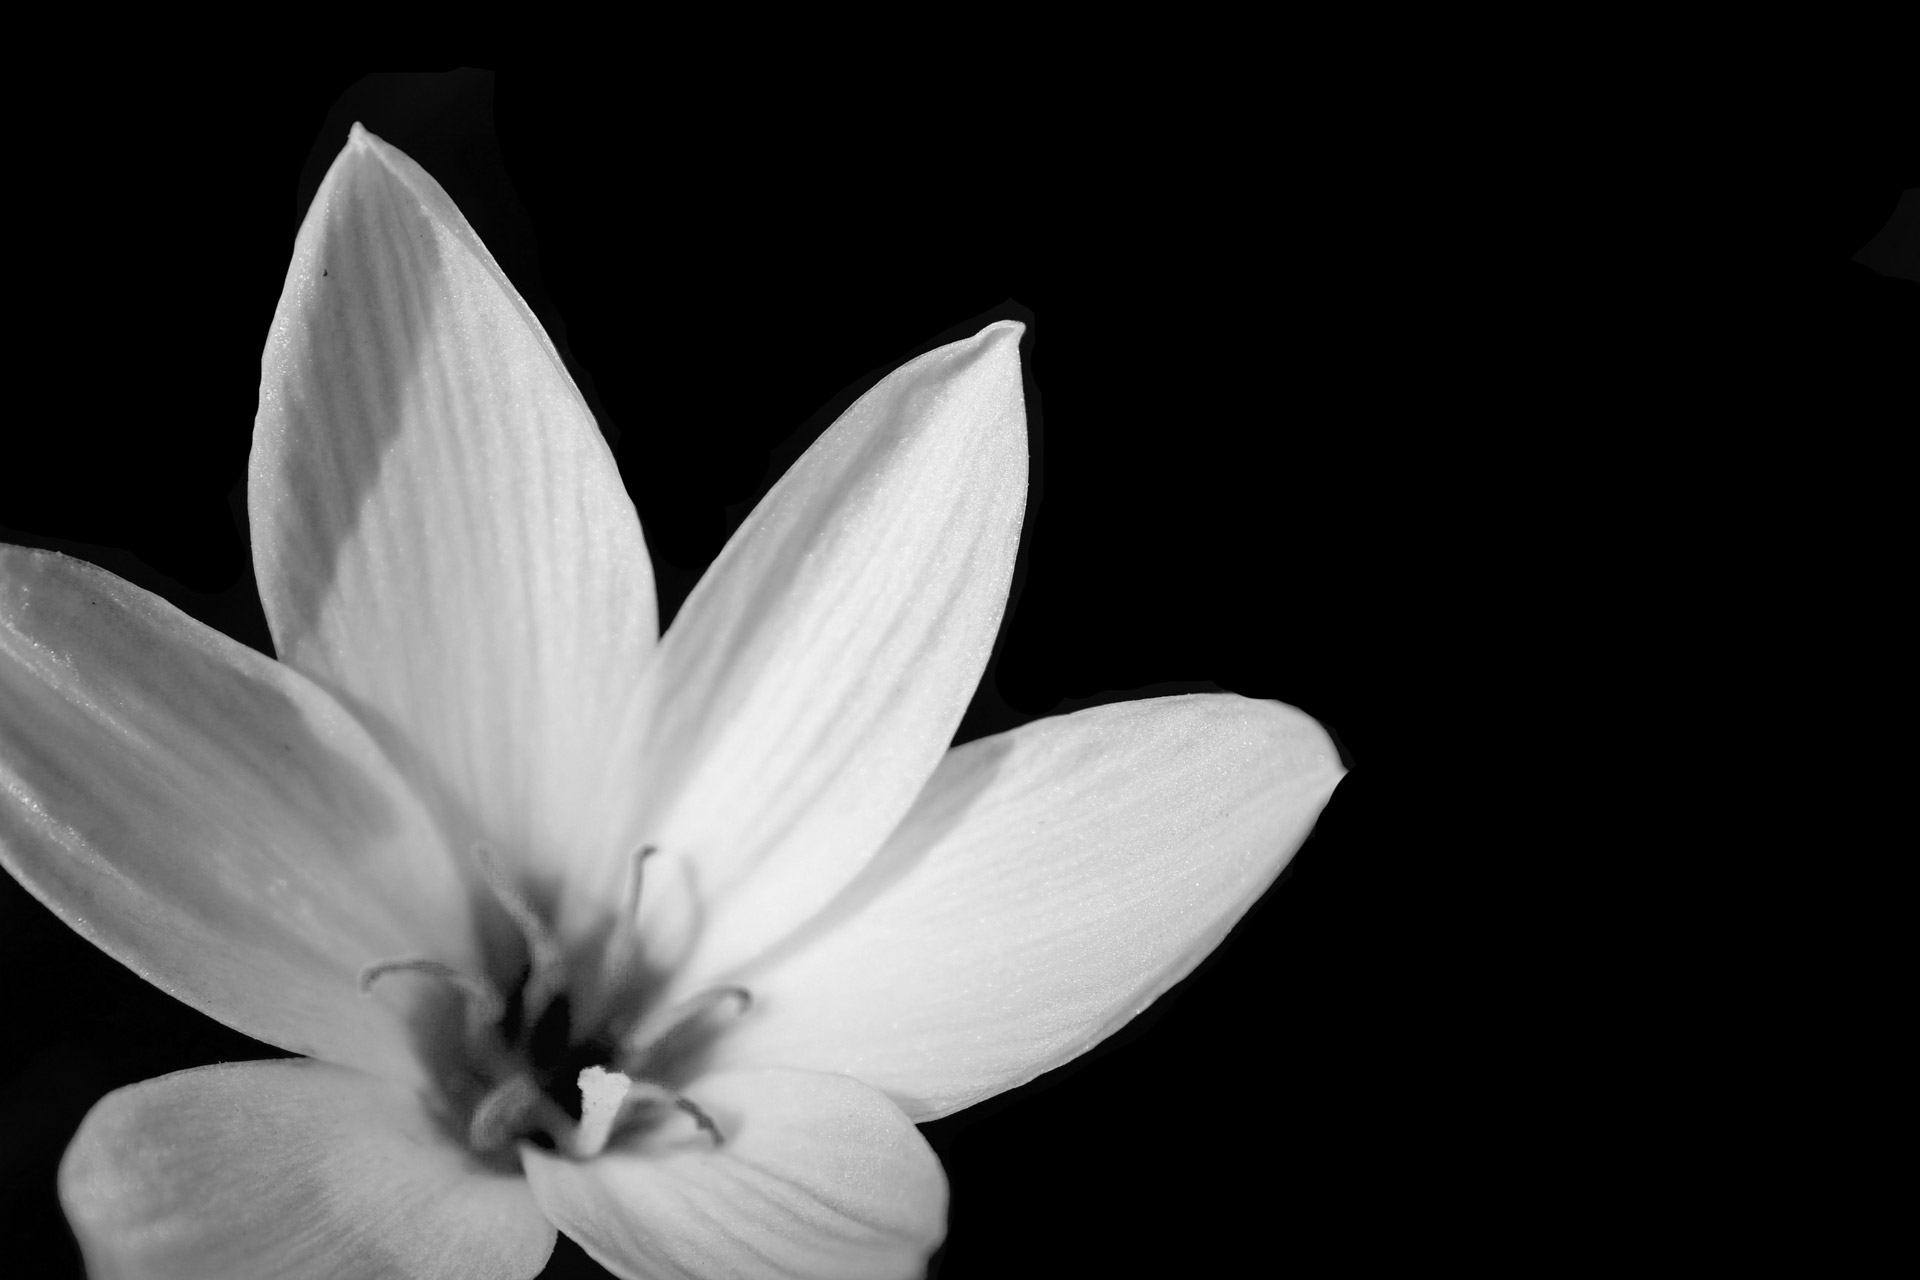 Black And White Flower Background 3 Free Stock Photo - Public Domain